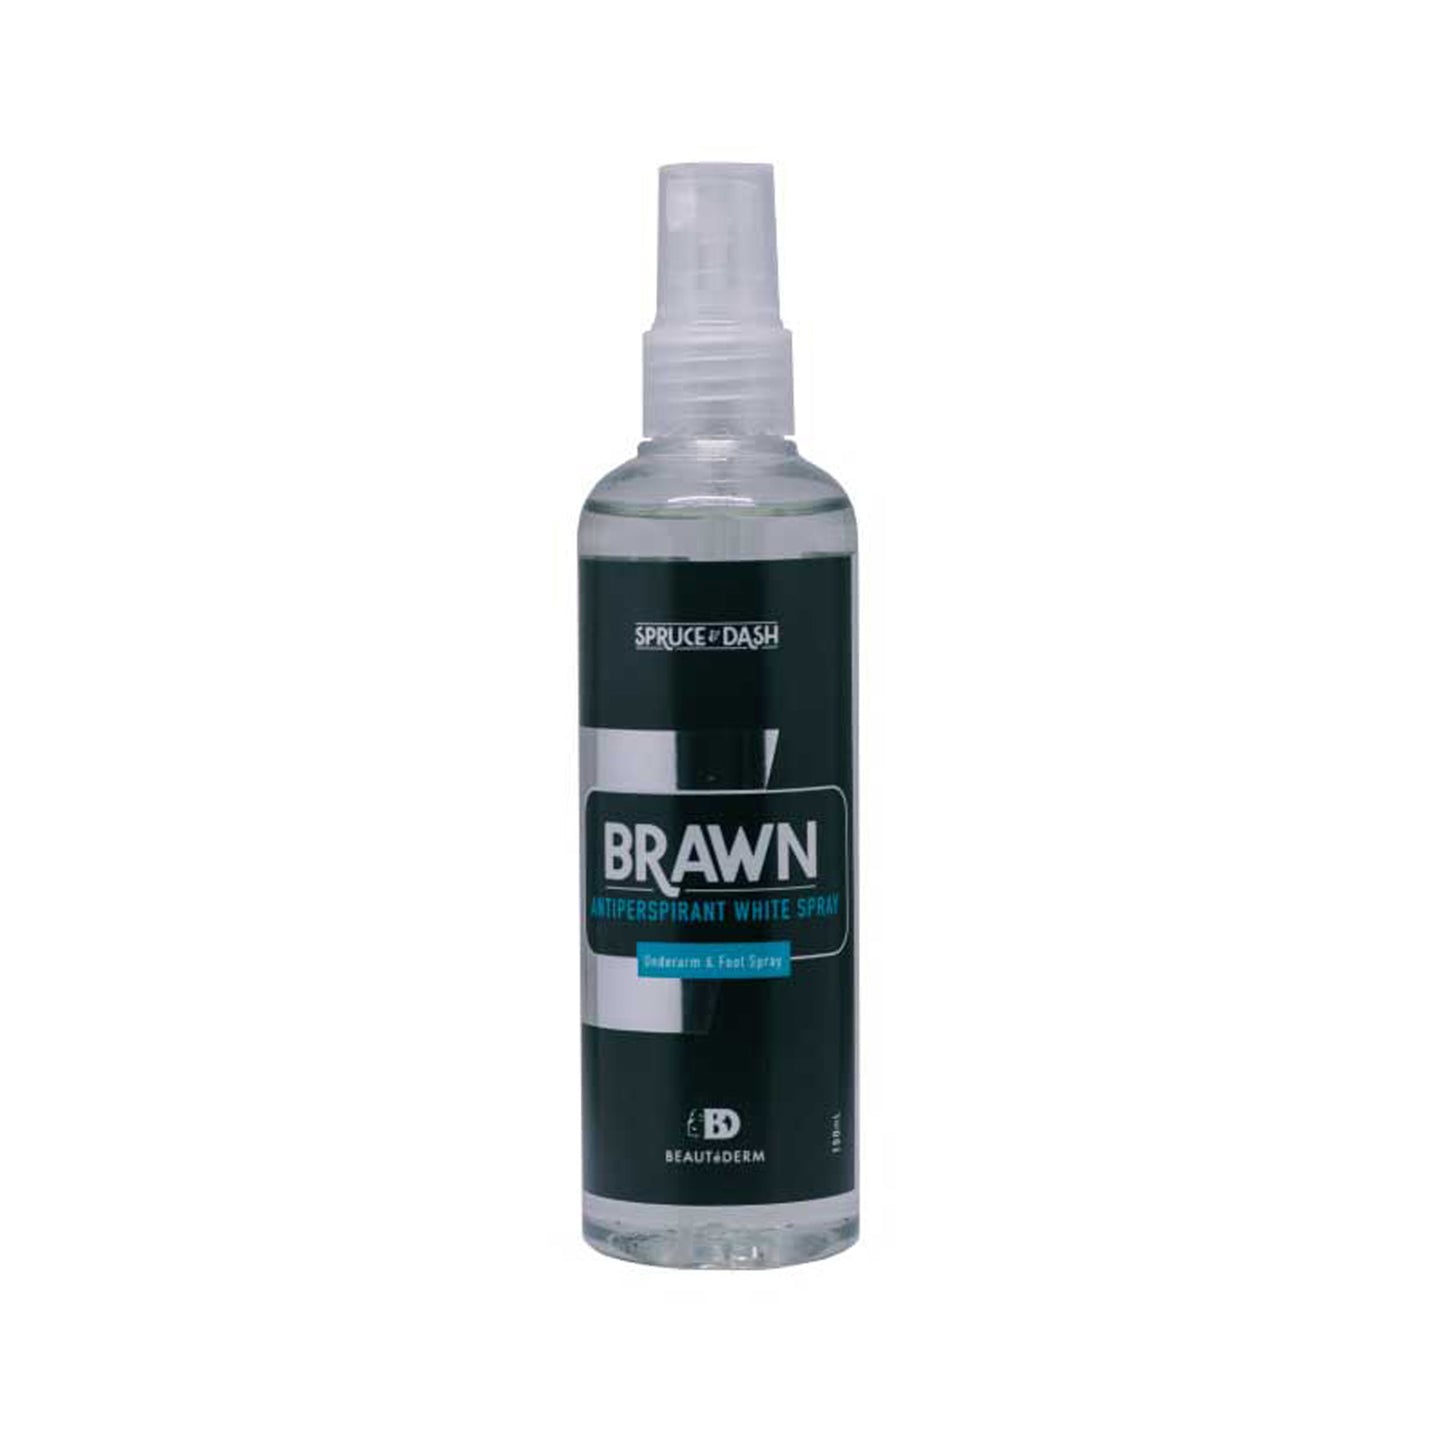 Beautederm Brawn Antiperspirant White Spray Smoothens Protects Body Odor